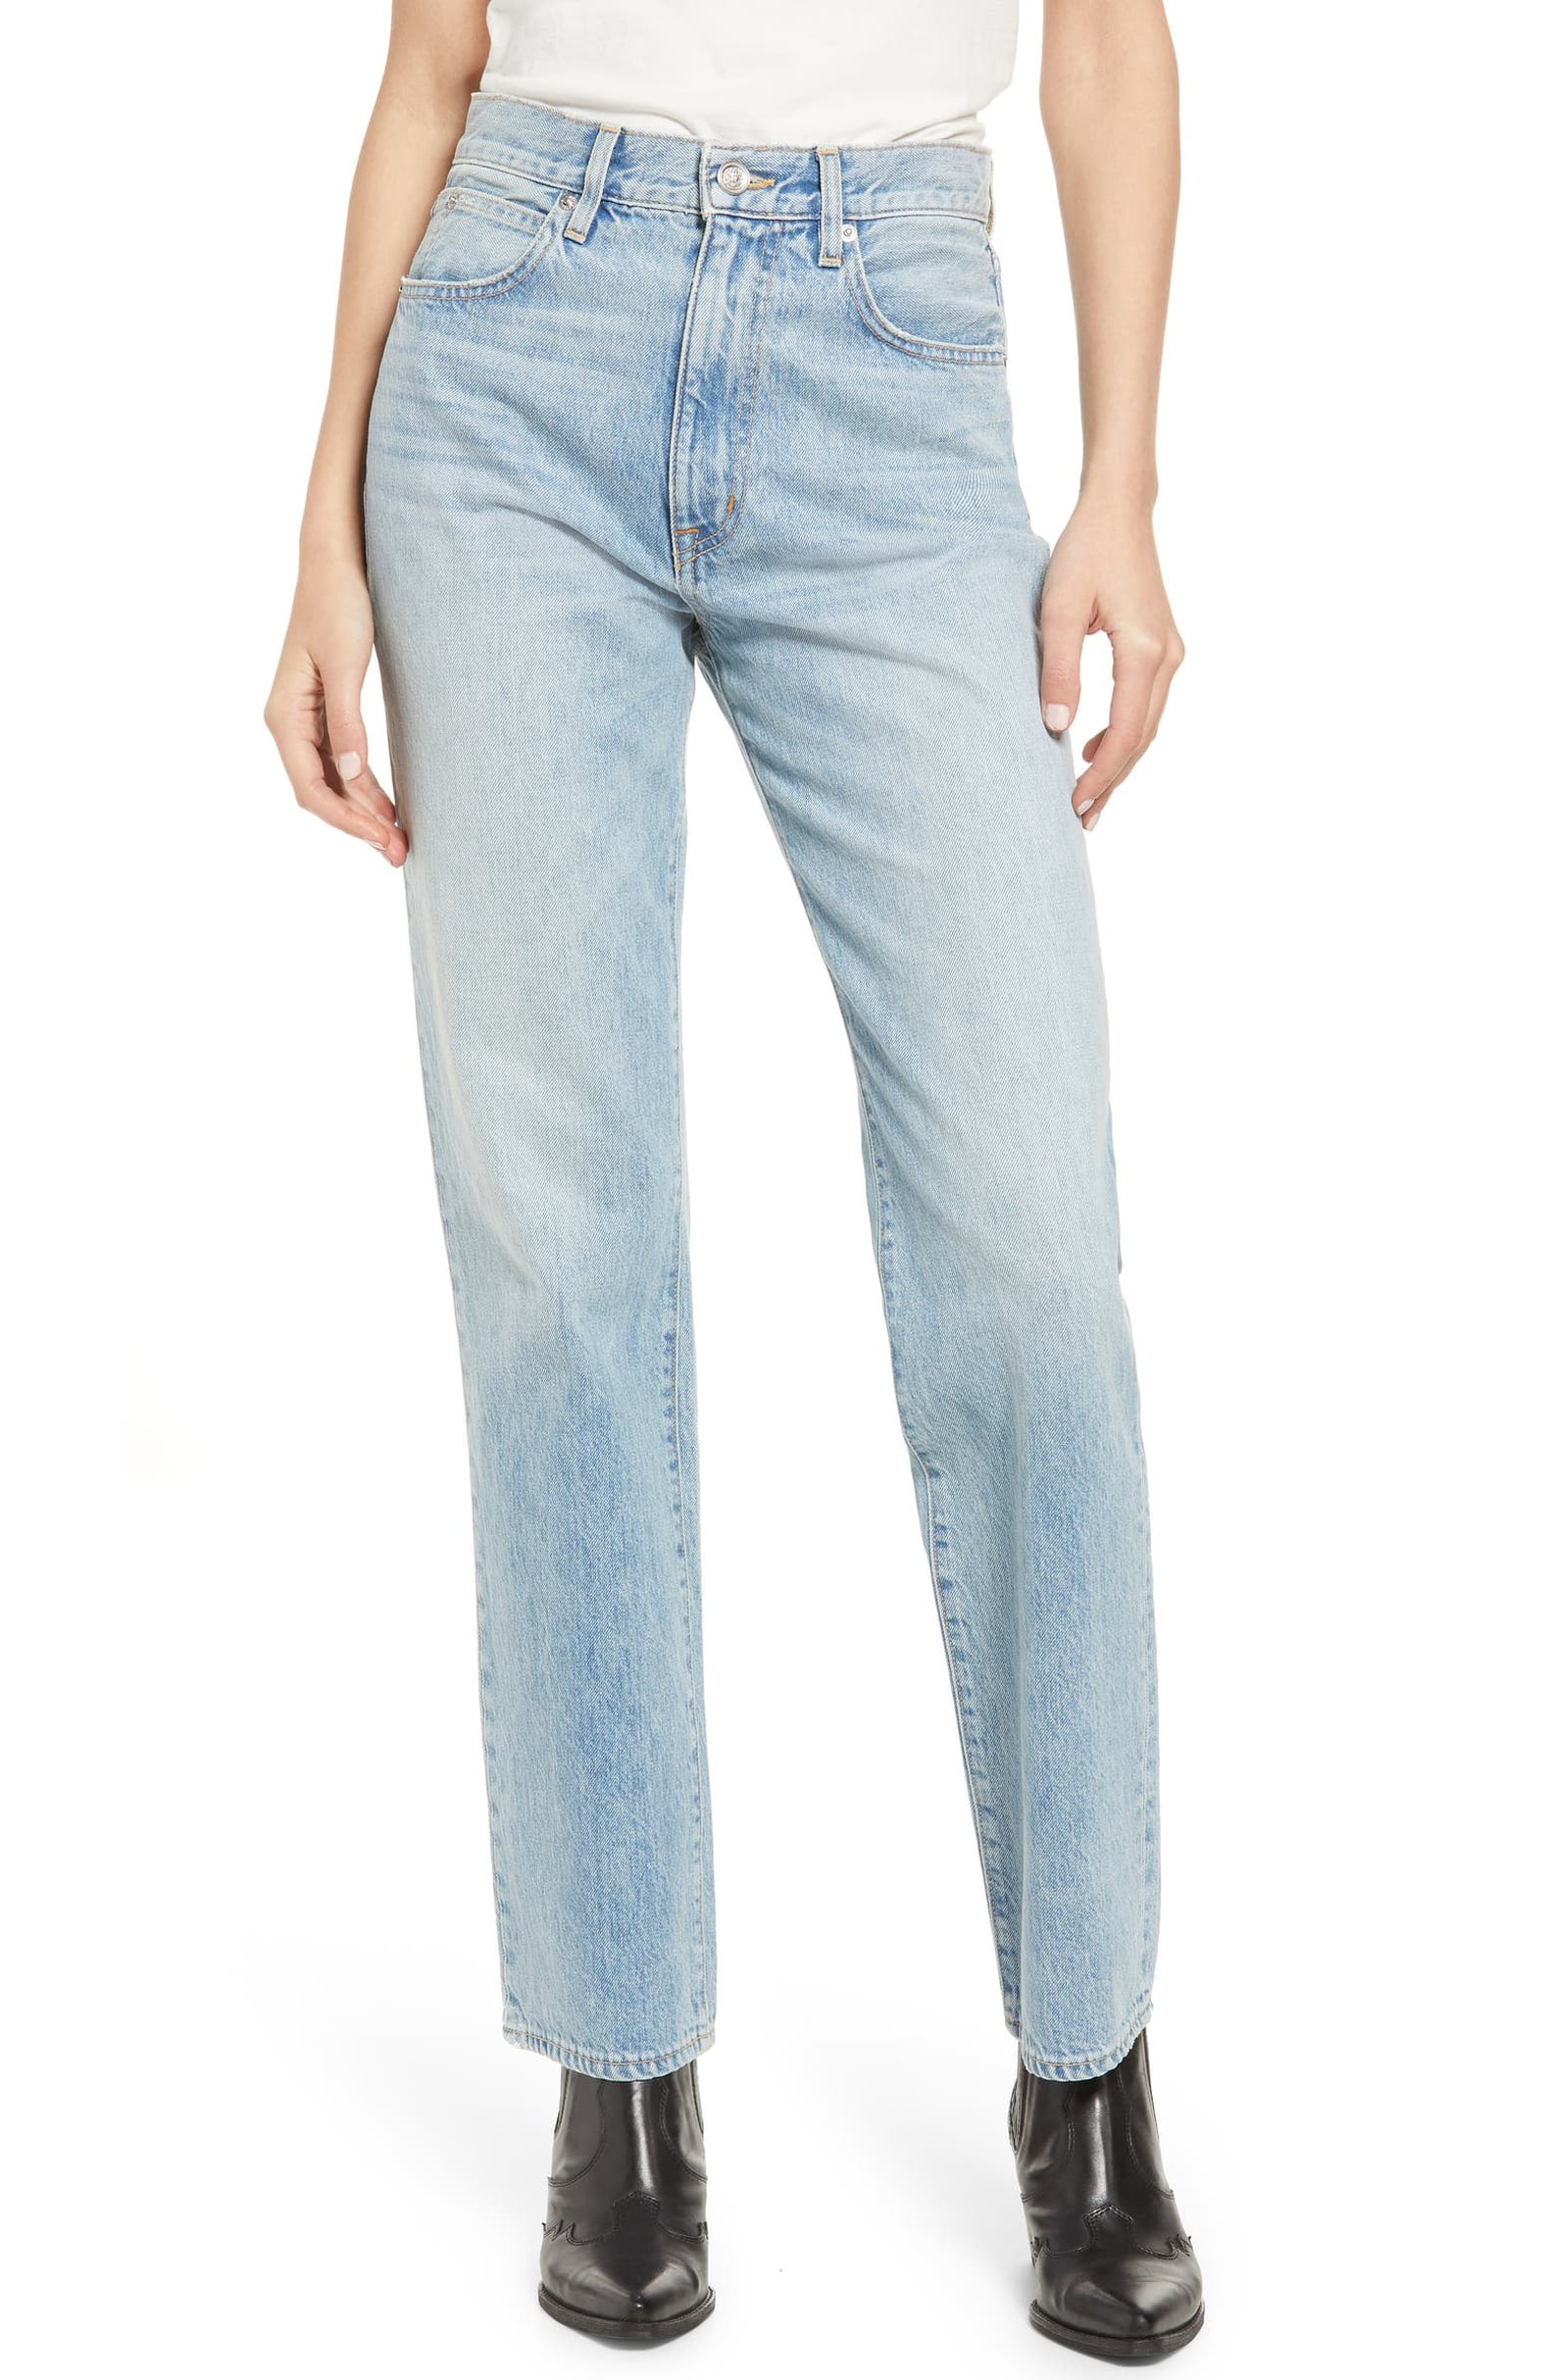 Best Jeans For Women on Sale | POPSUGAR Fashion